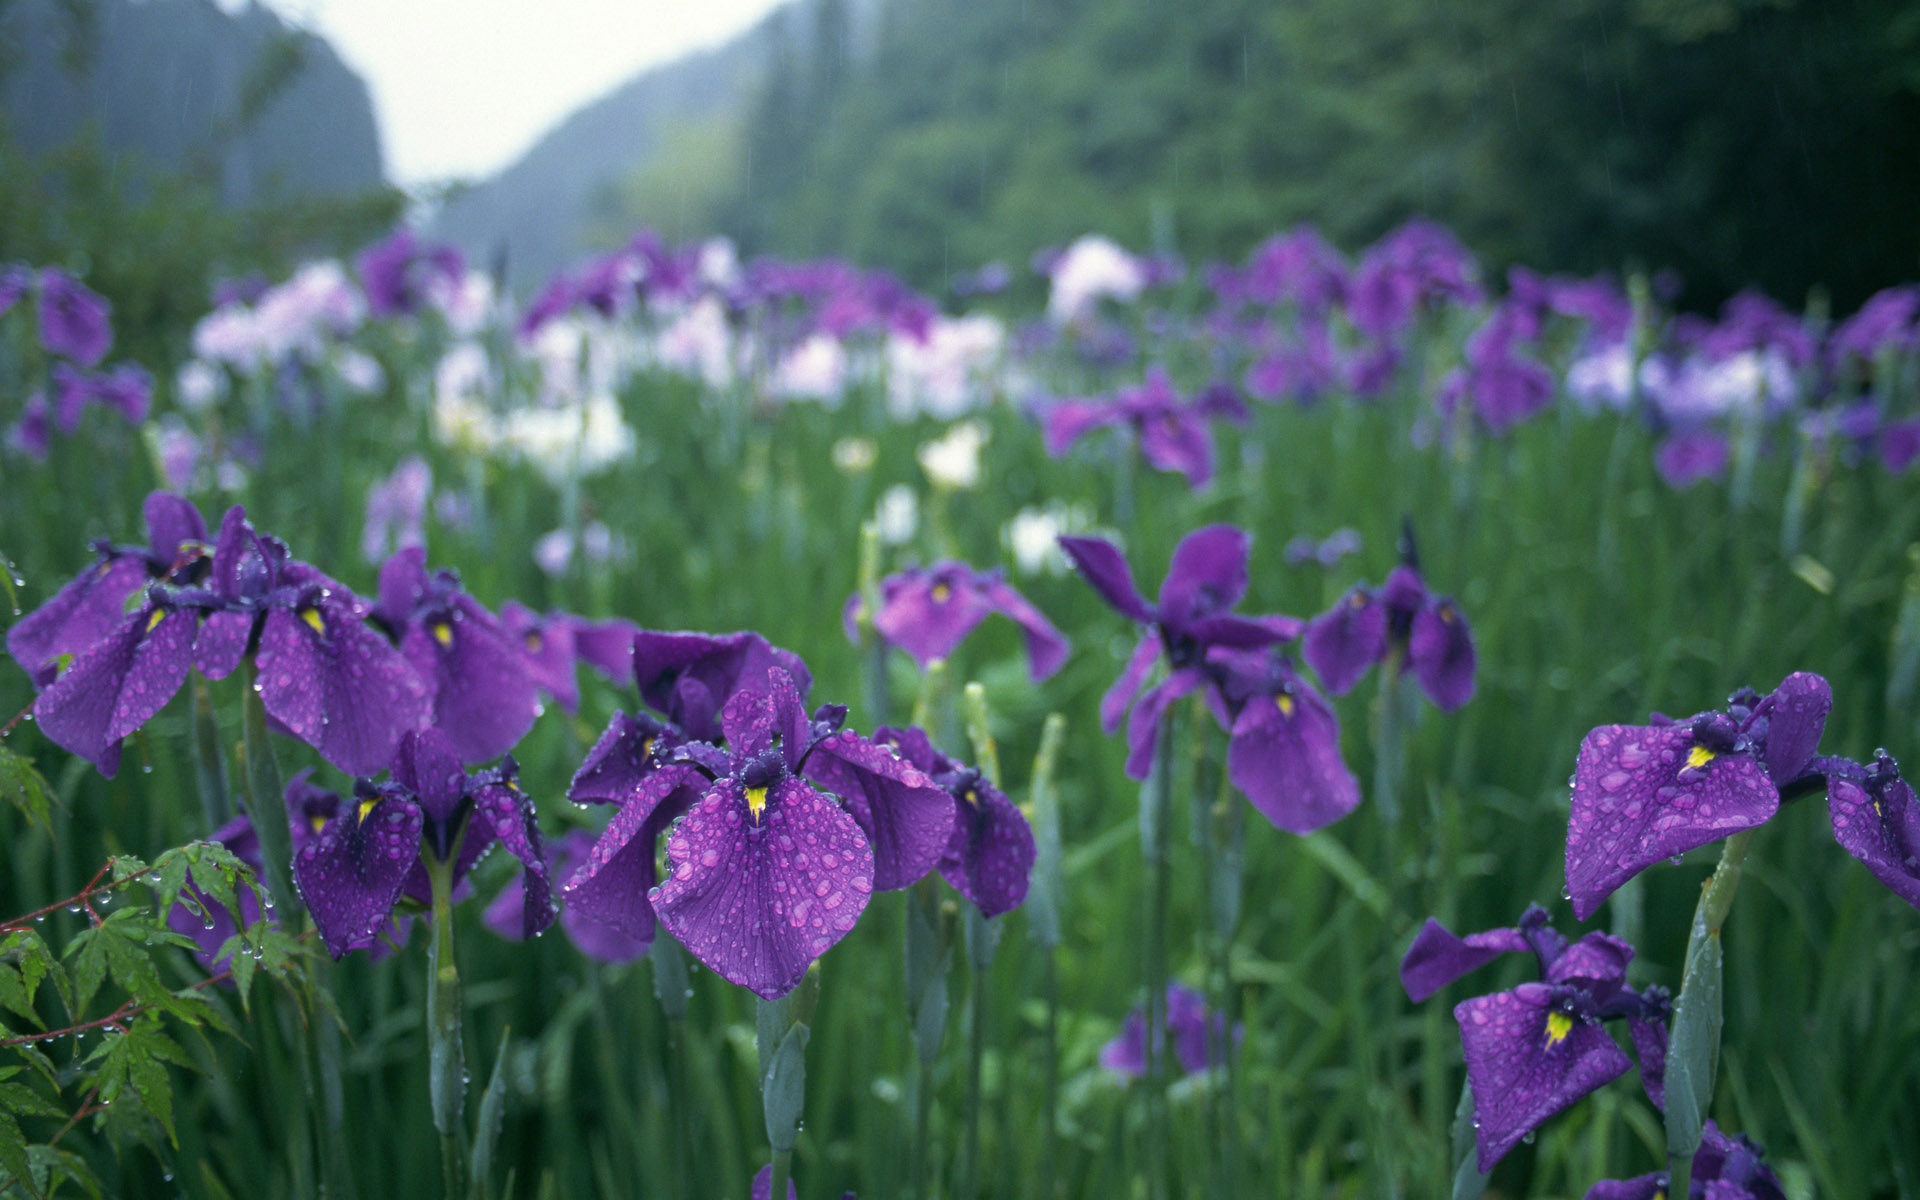 166489 descargar imagen tierra/naturaleza, iris, flores: fondos de pantalla y protectores de pantalla gratis